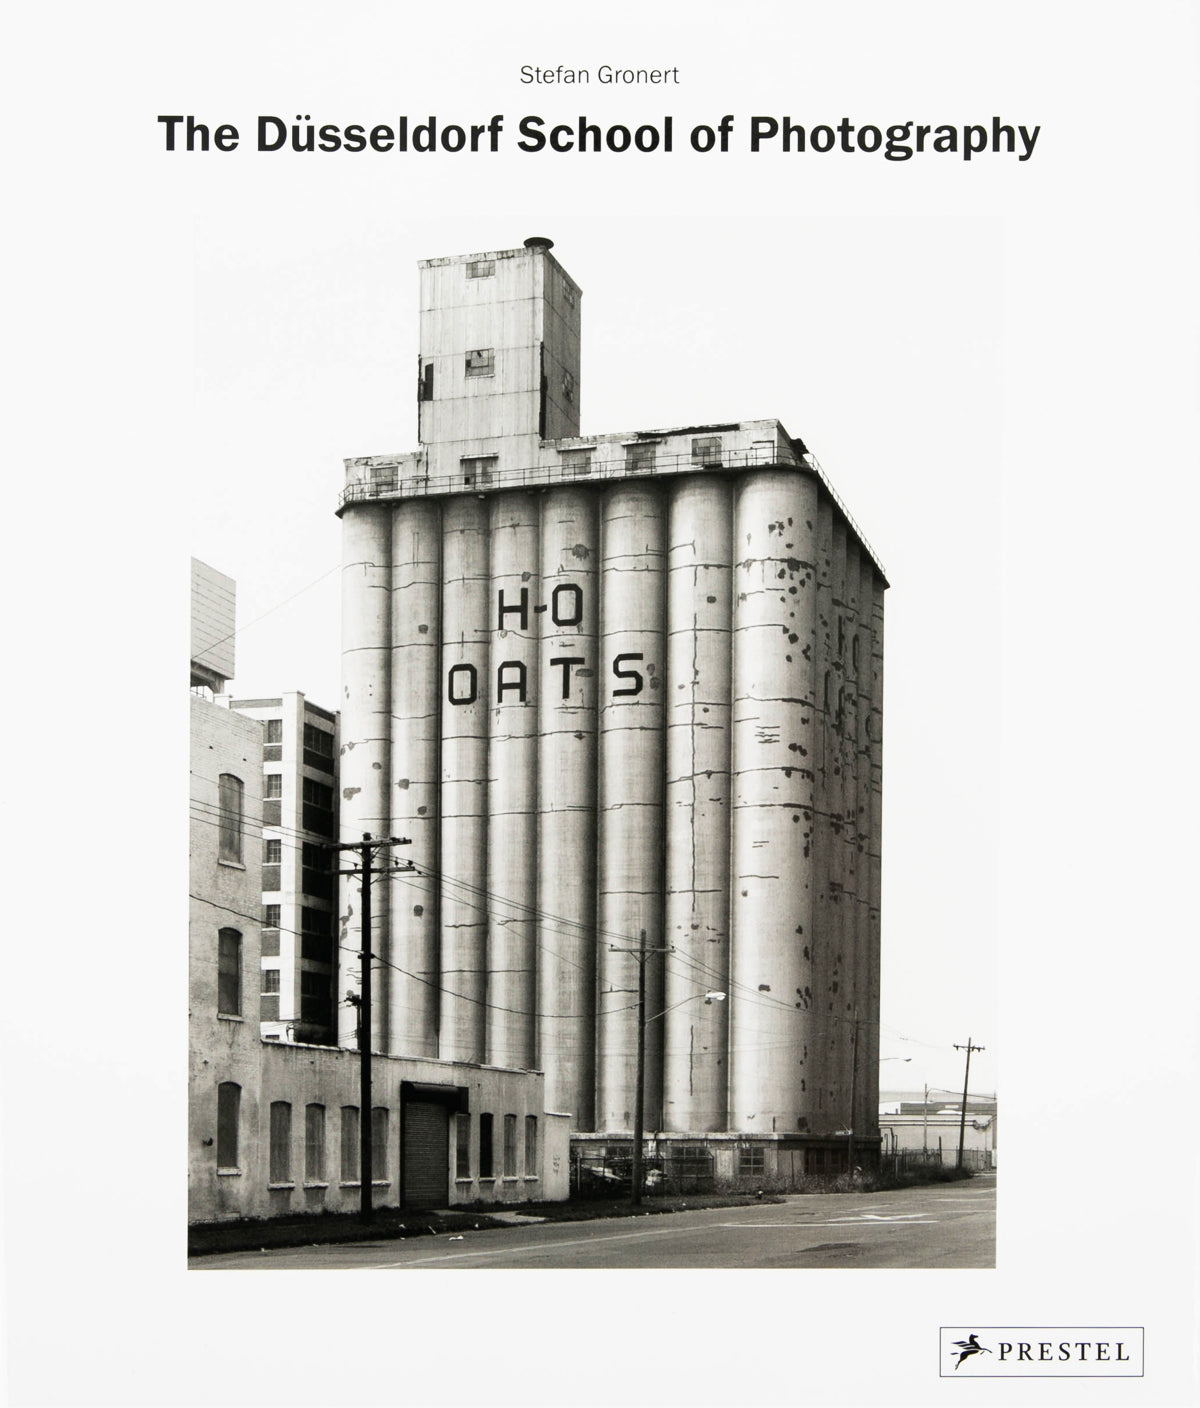 Dusseldorf School of Photography